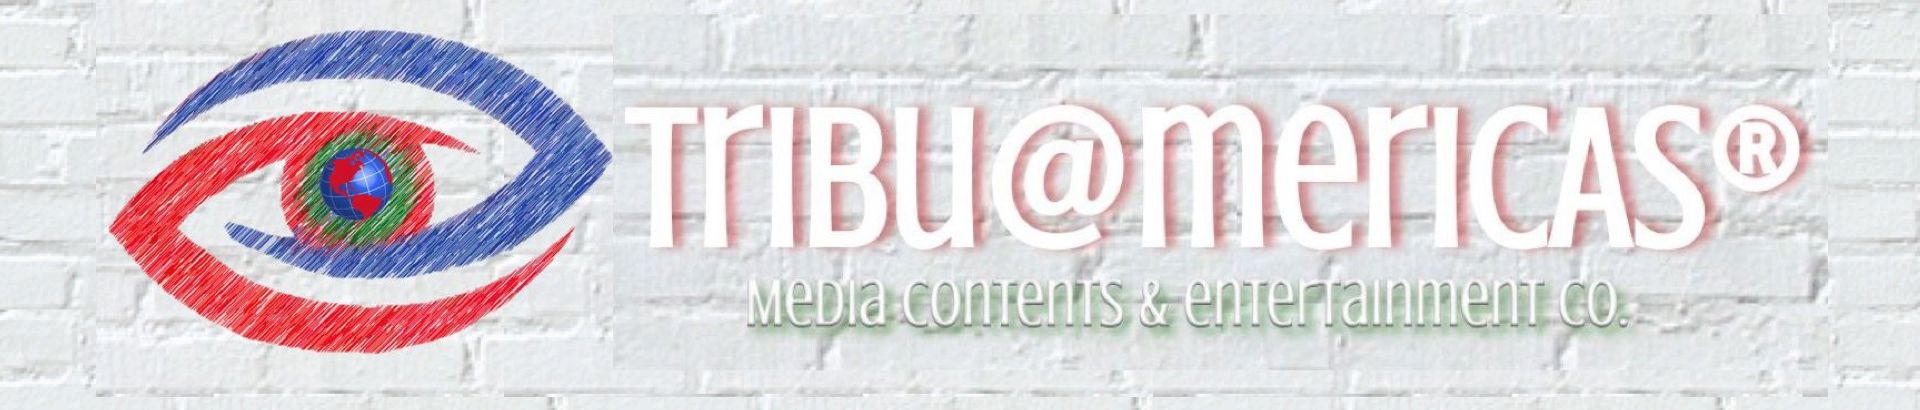 Noticias TribuAmericas Media Contents & Entertainment, Co.